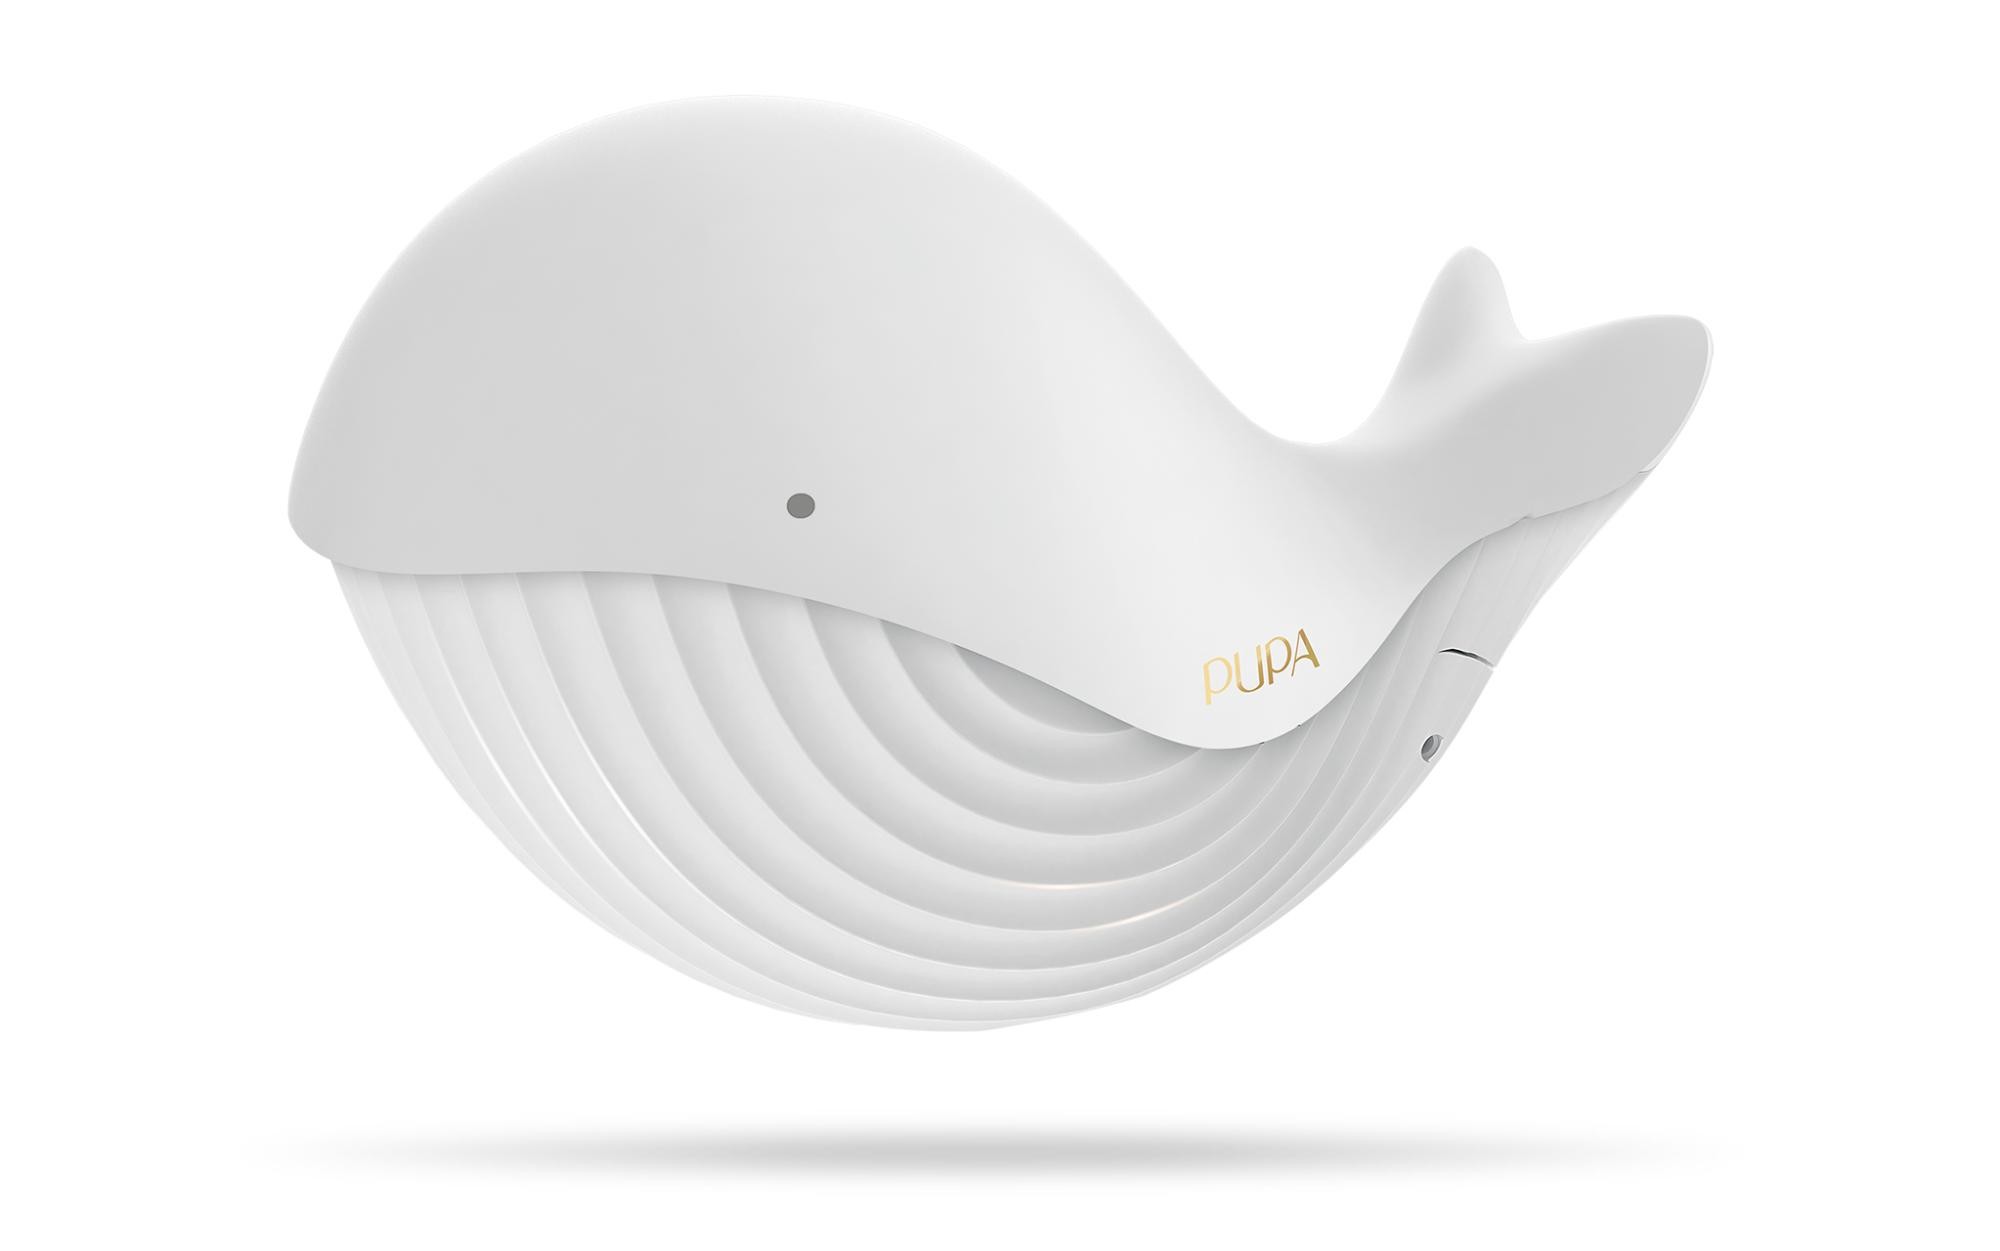 Pupa Pupa Whale 1-